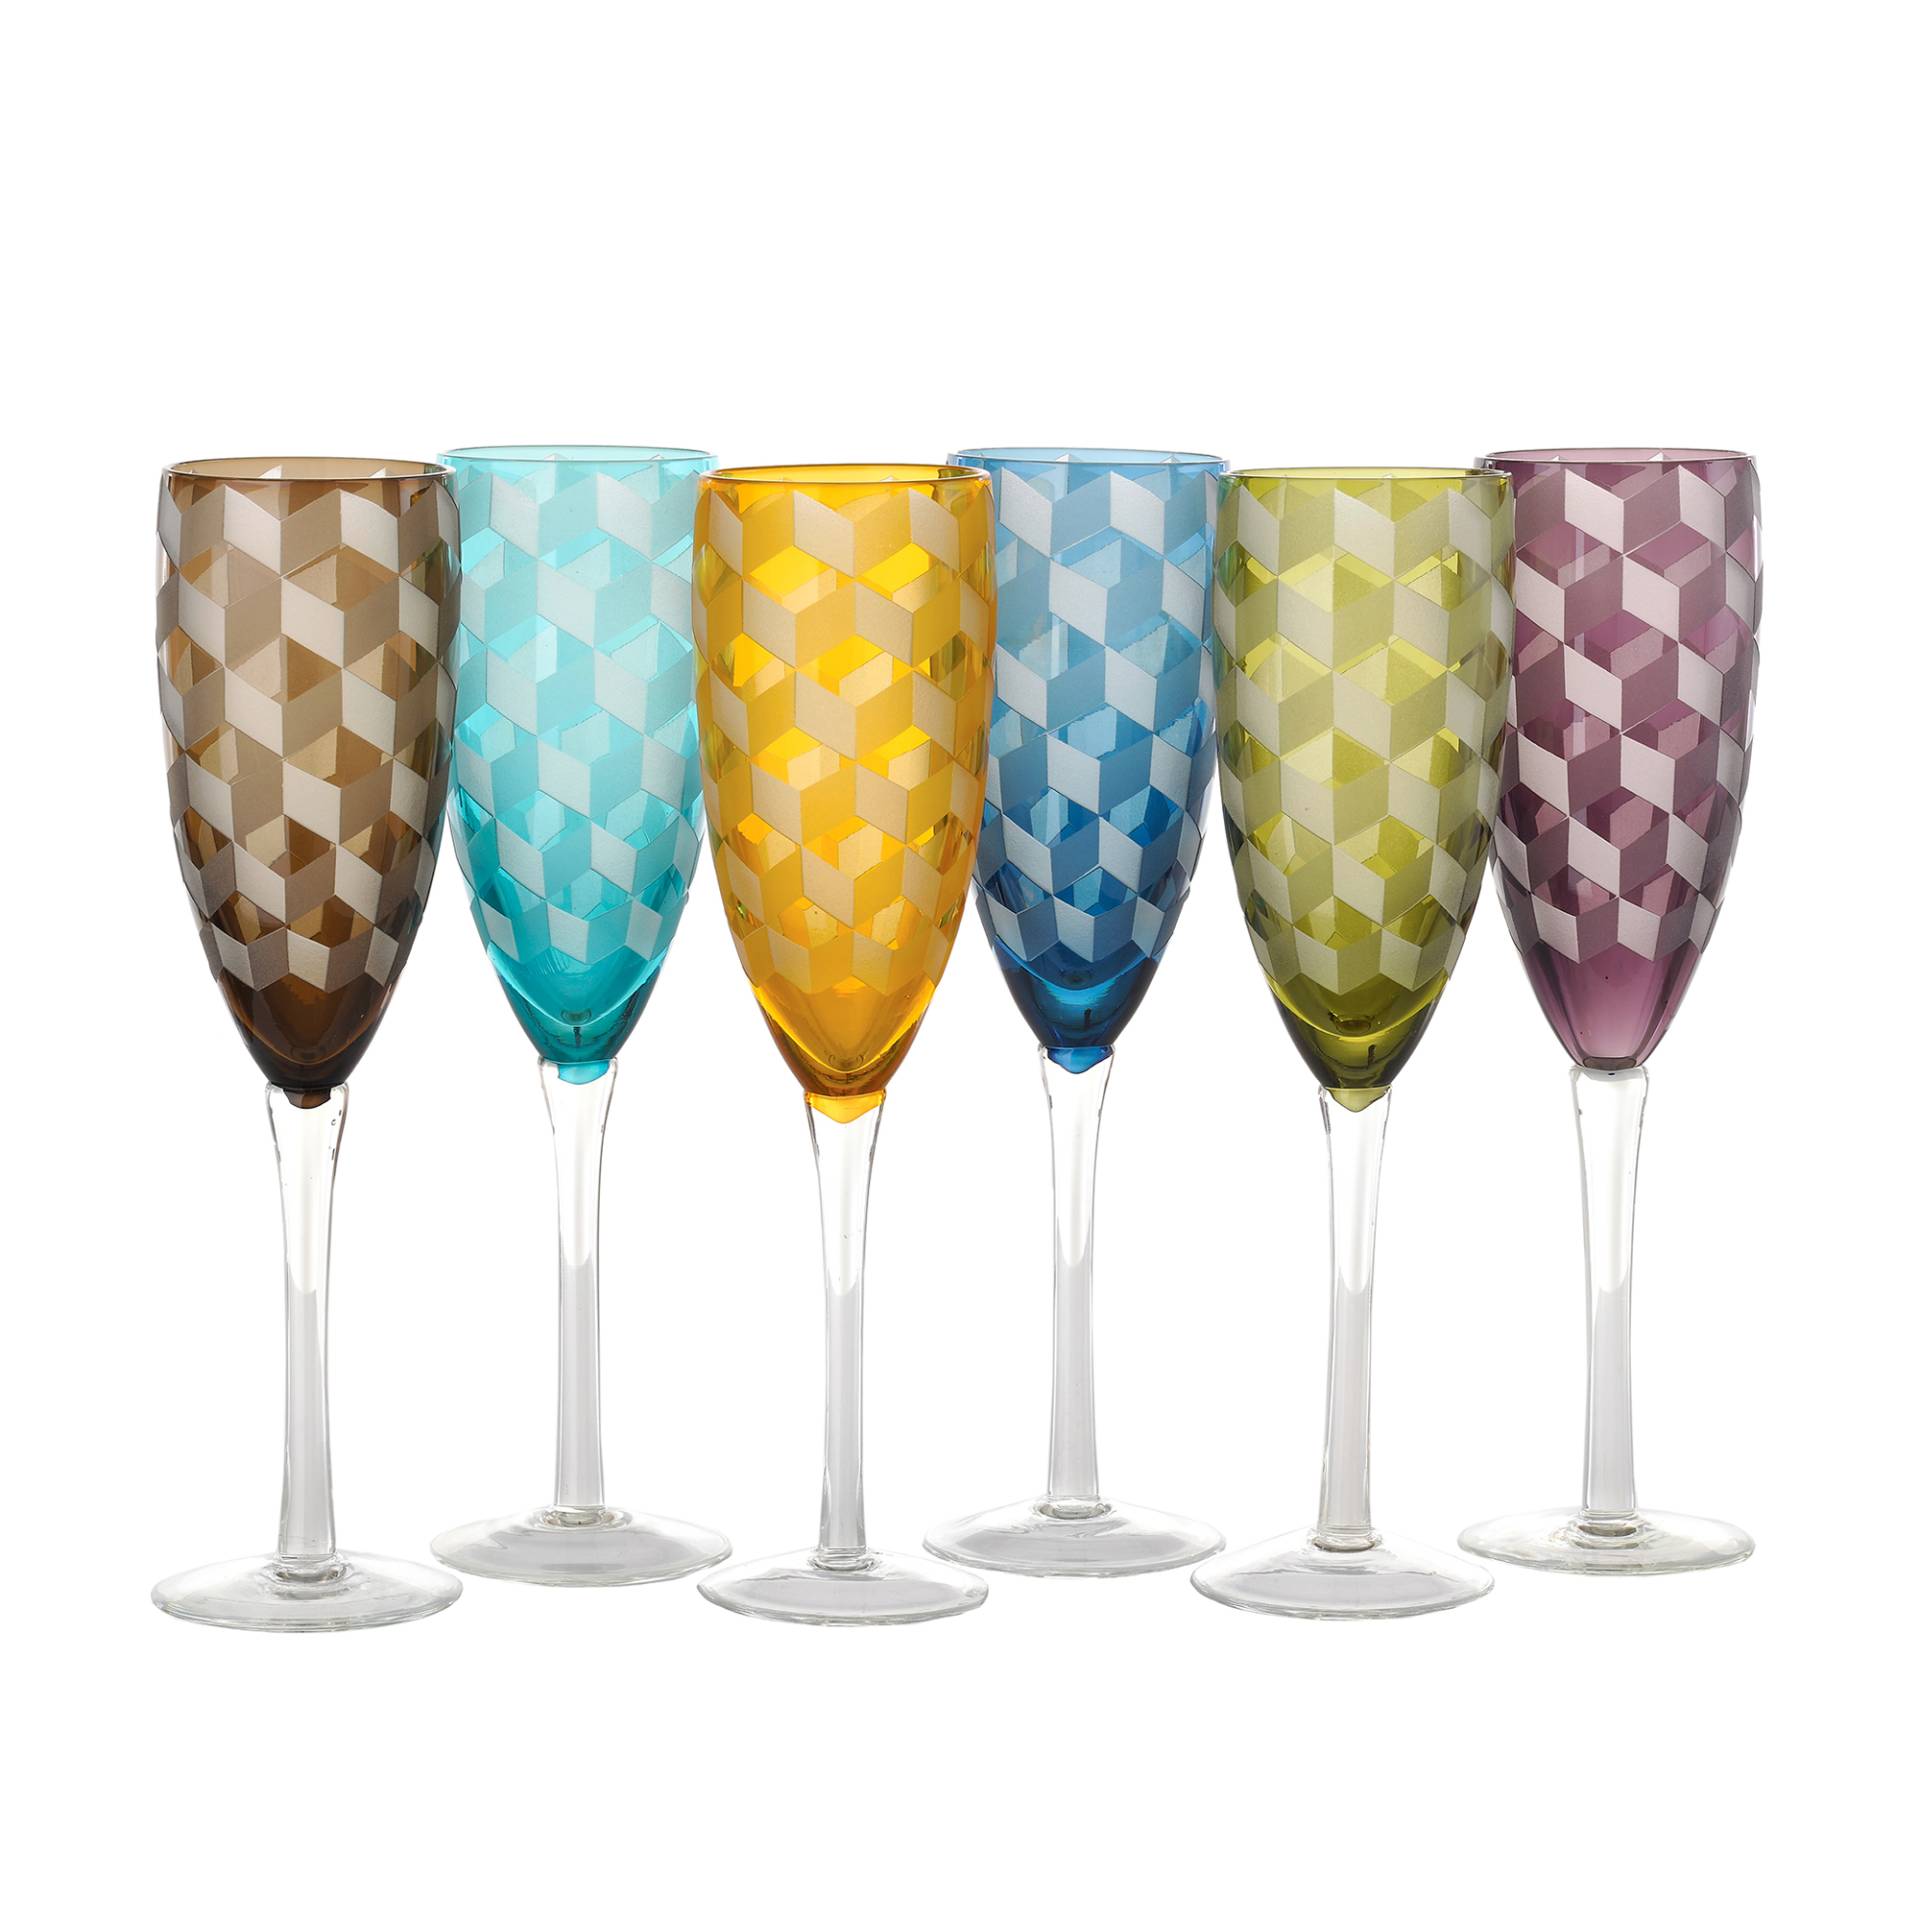 pols potten - Blocks Champagnerglas 6er Set - mehrfarben/H 24cm x Ø 7,5cm von pols potten